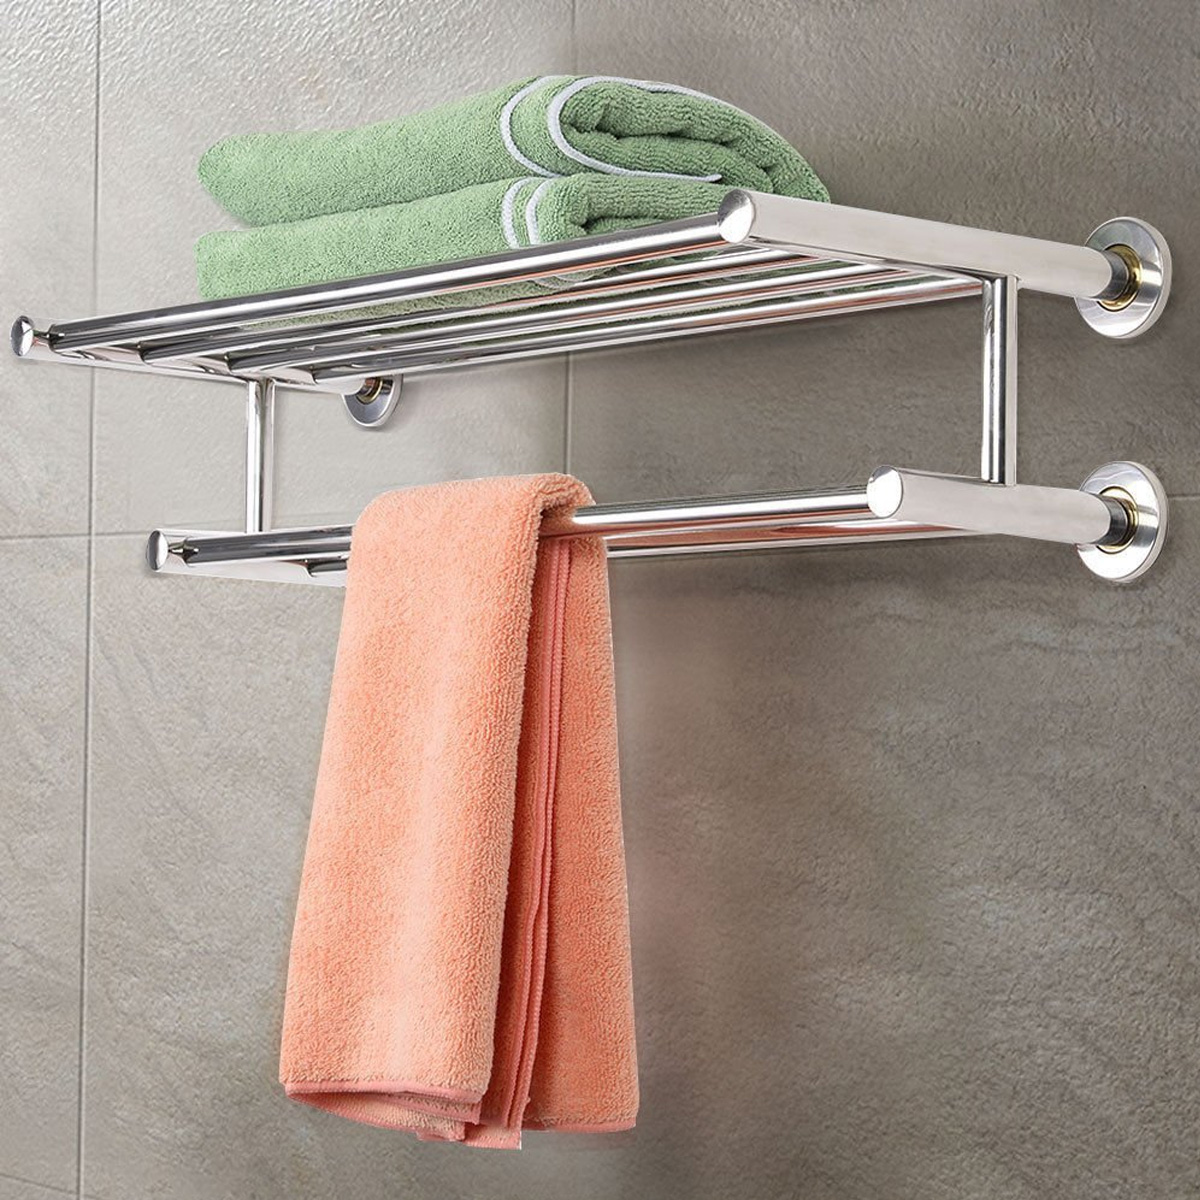 304-Stainless-Steel-Double-Tiers-Towel-Rail-Rack-Shelf-Wall-Mounted-Bathroom-1776590-2